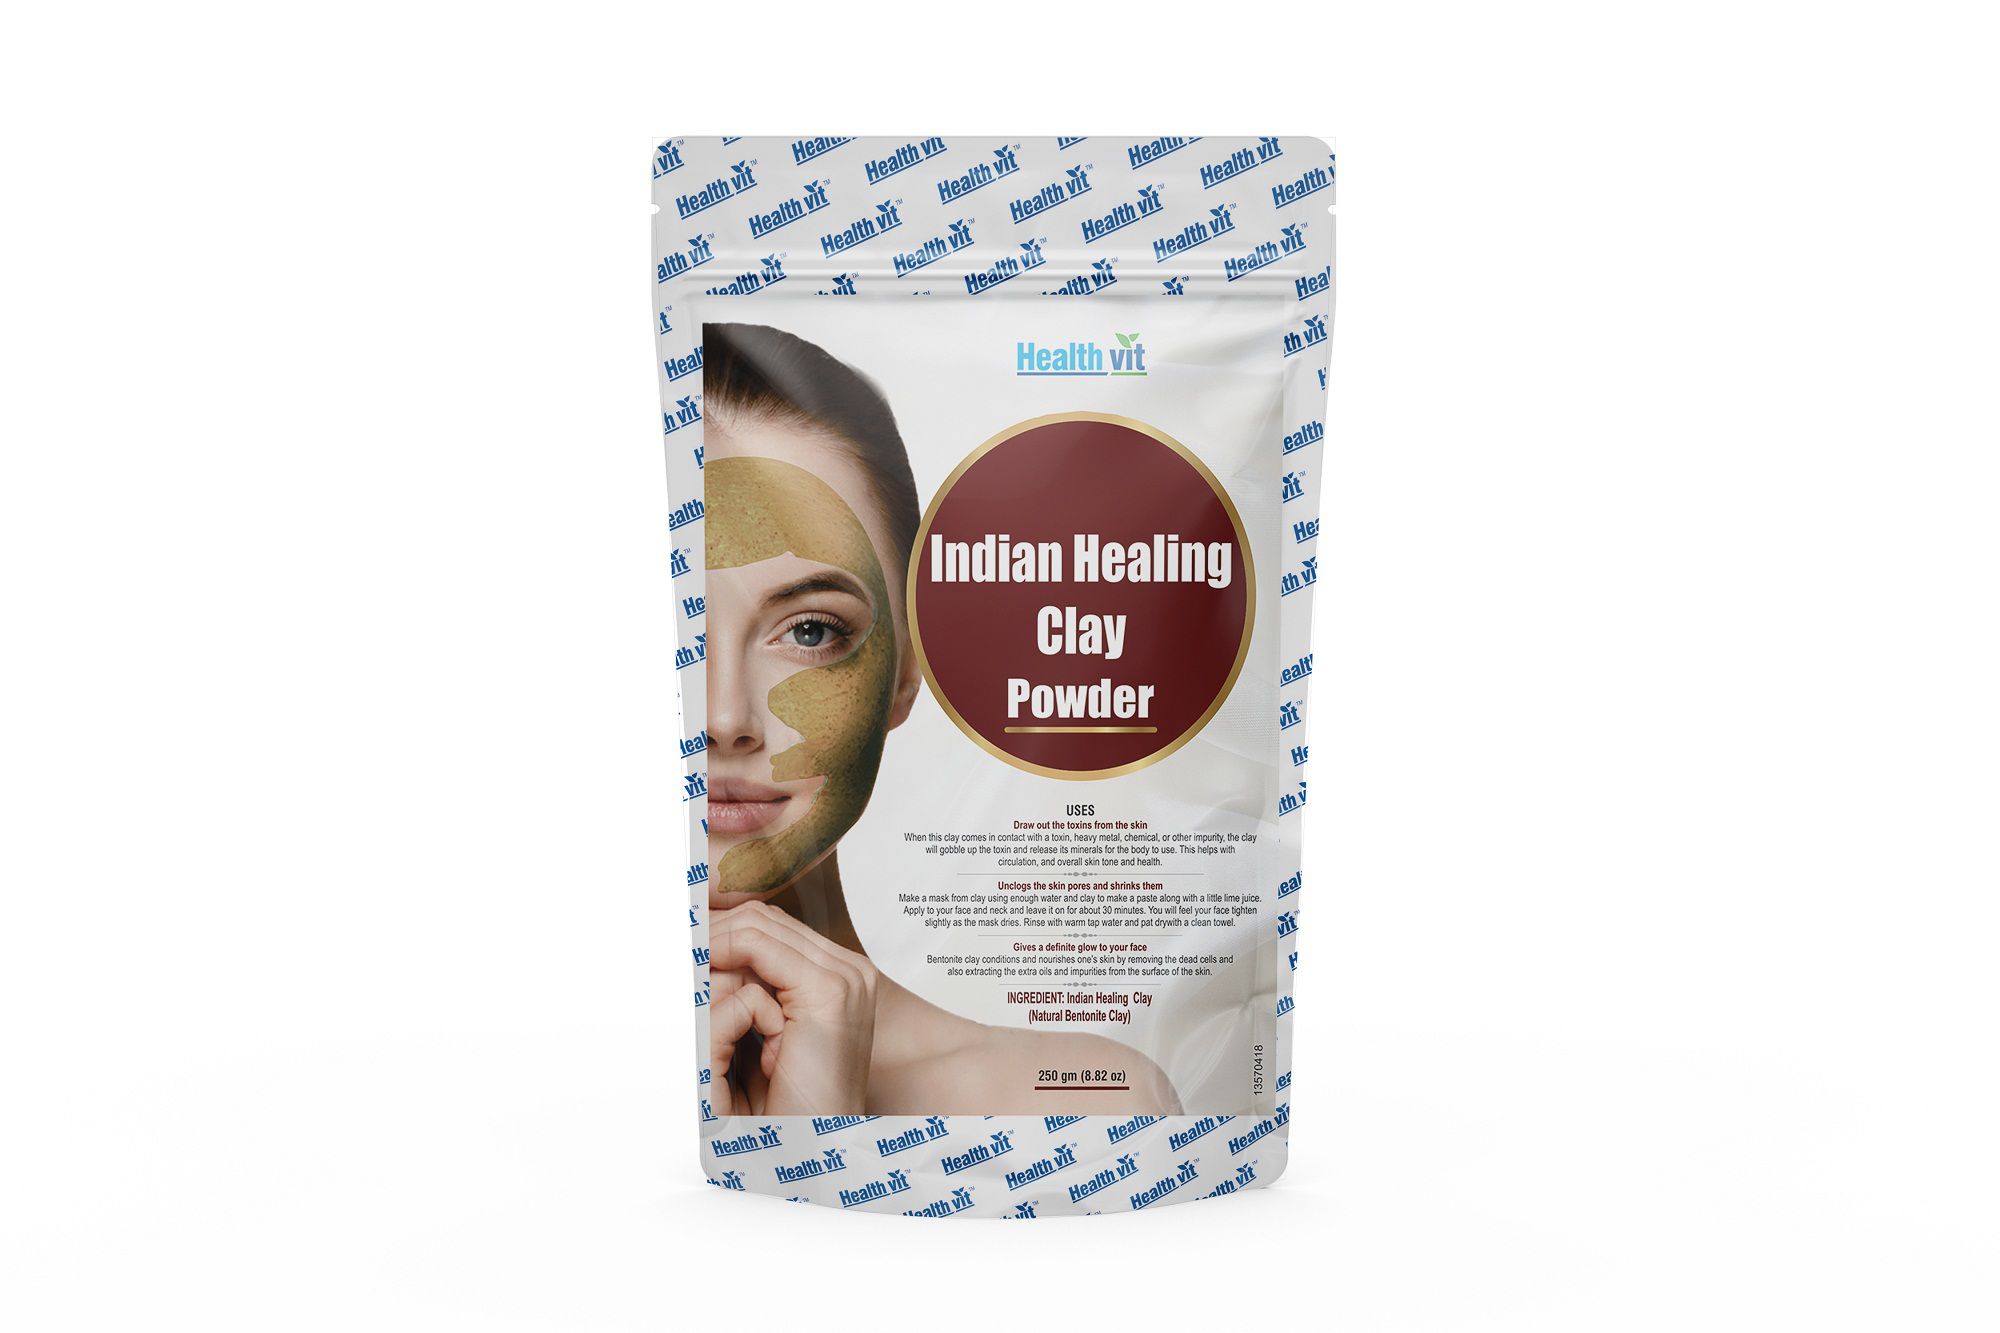 HealthVit Face Pack Masks Indian Healing Clay Powder gm